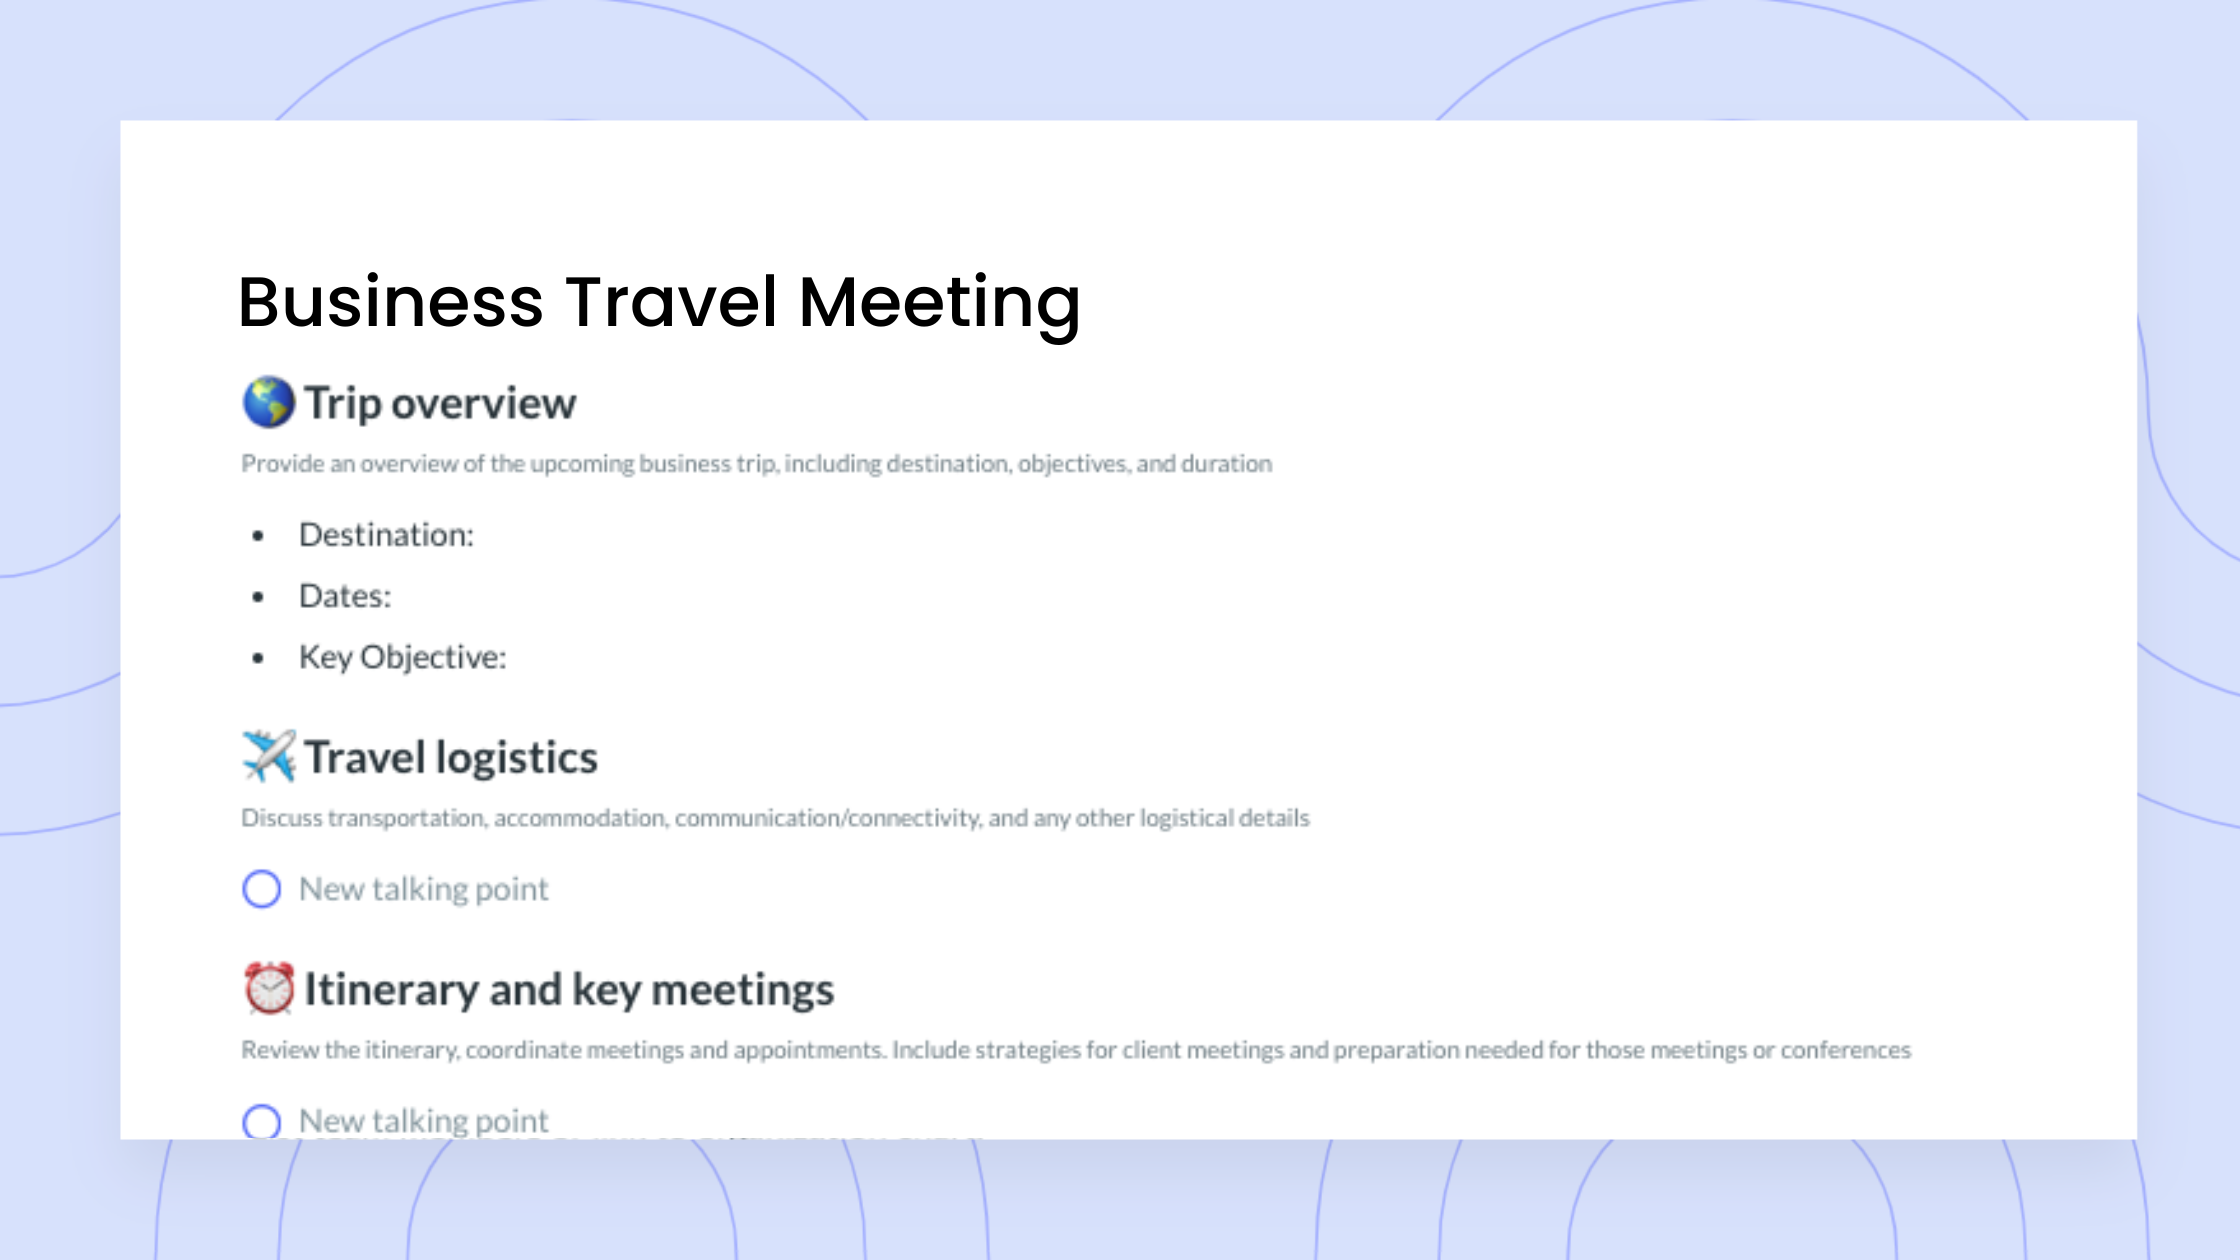 Business Travel Meeting Agenda Template